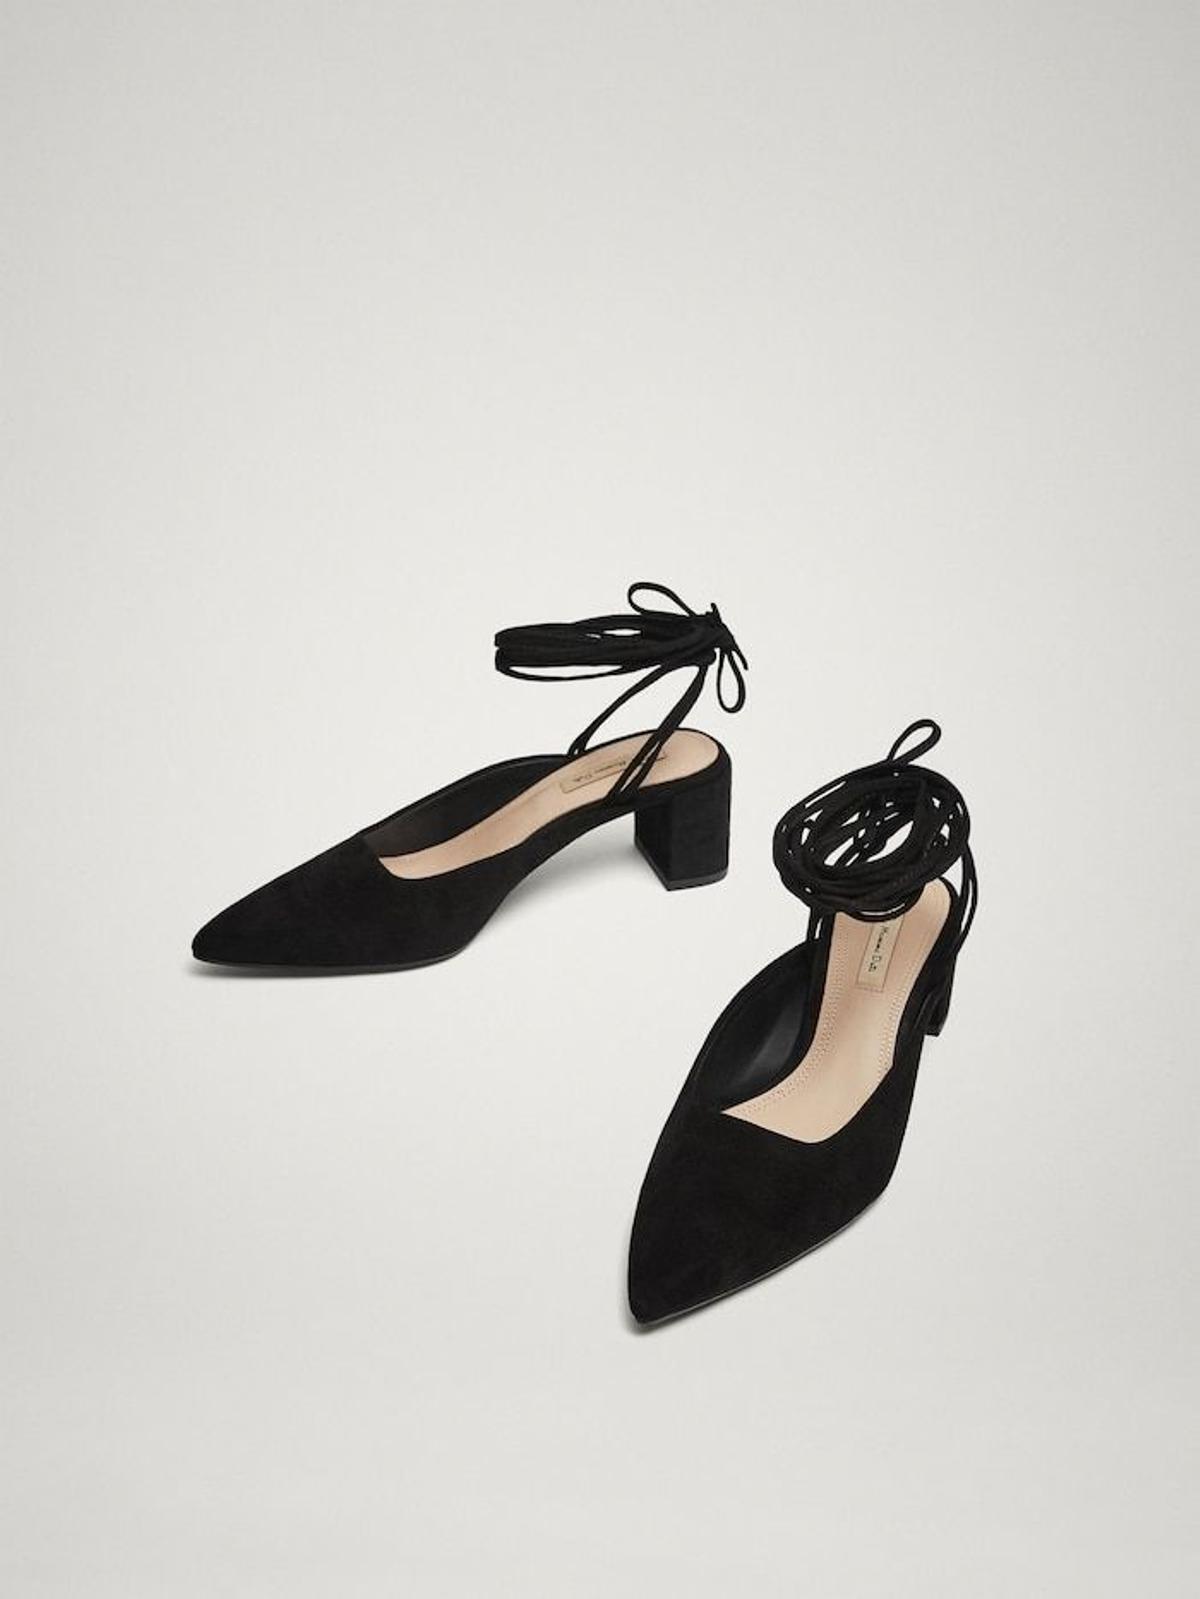 Massimo Dutti firma estos zapatos  atados al tobillo con tacón grueso en ante de color negro